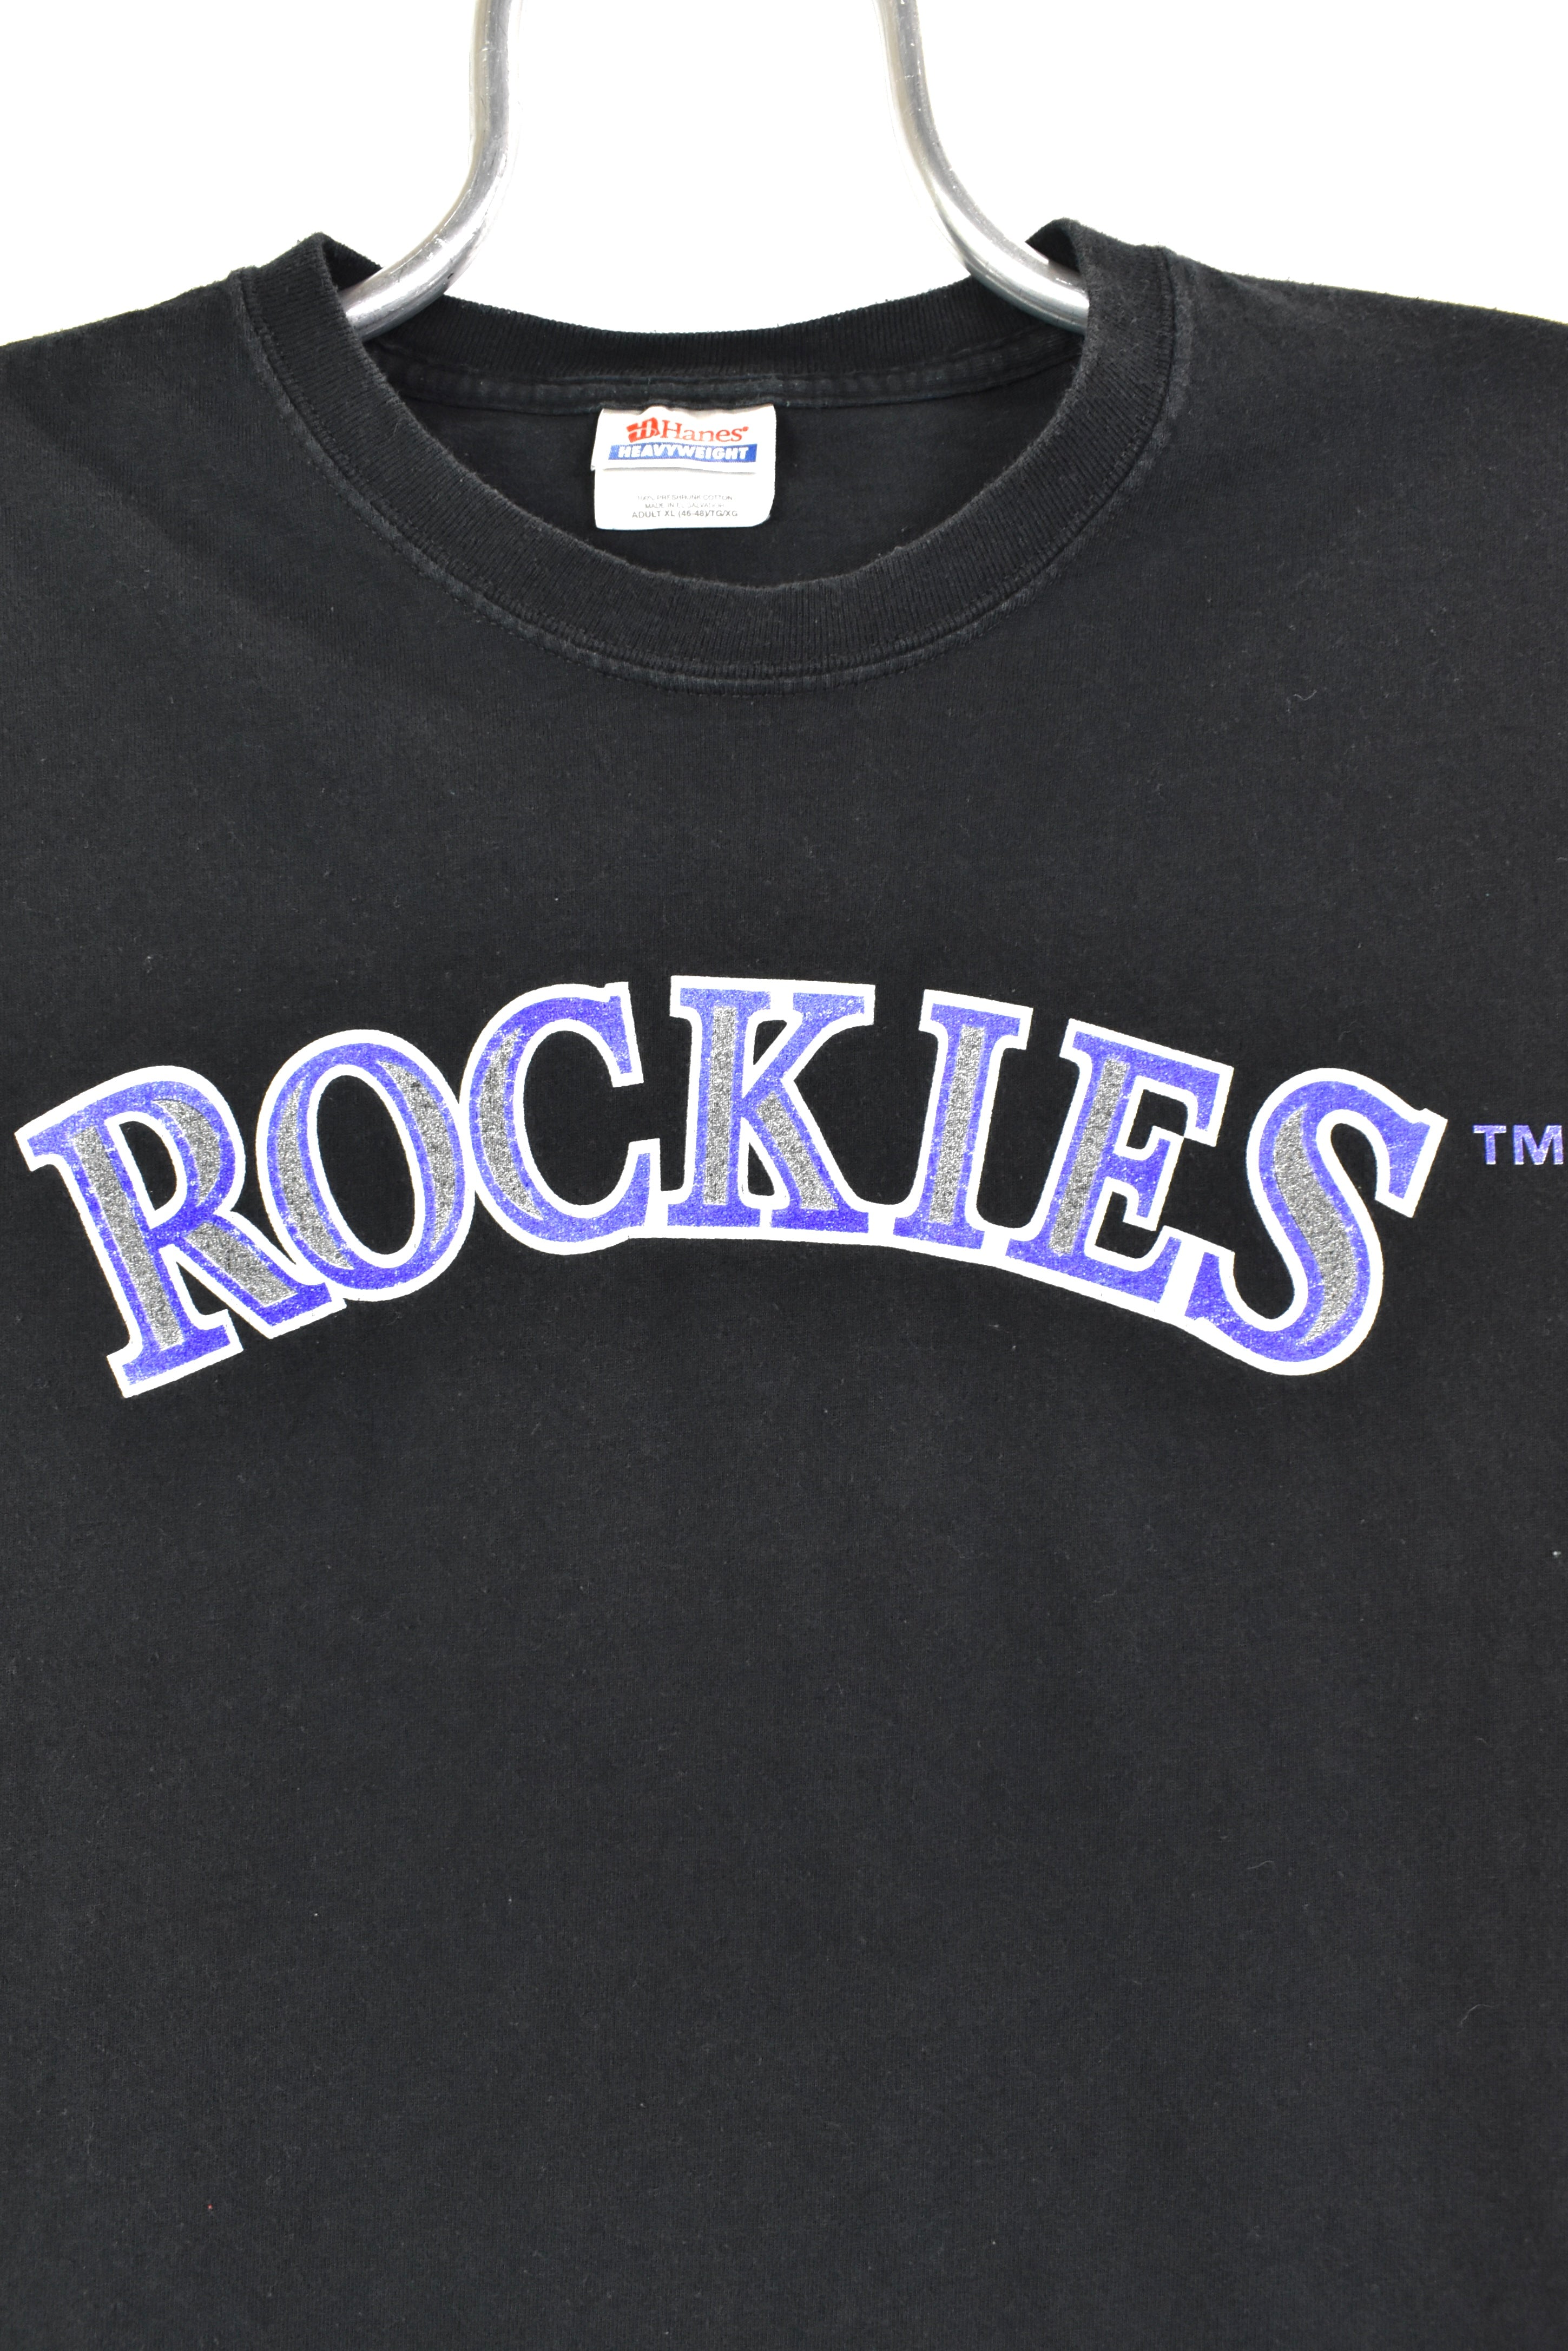 STARTER, Shirts, Vintage Colorado Rockies Jersey